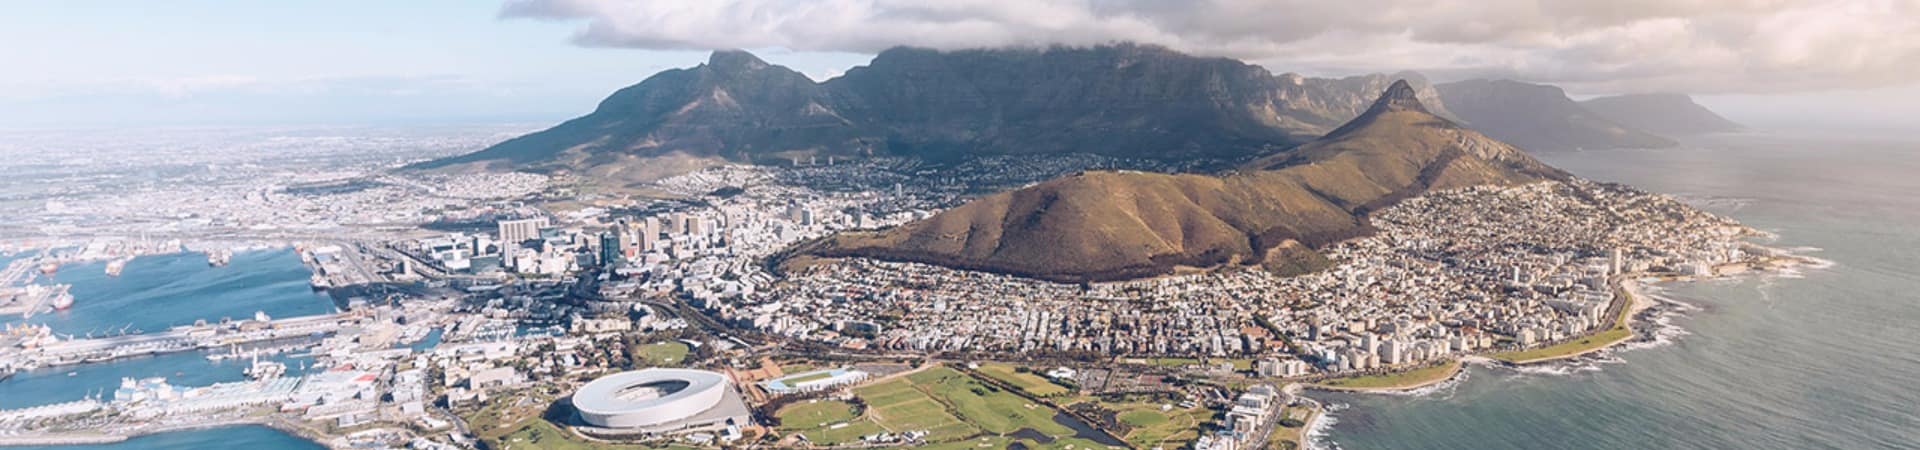 Vista aérea de Cape Town, África do Sul